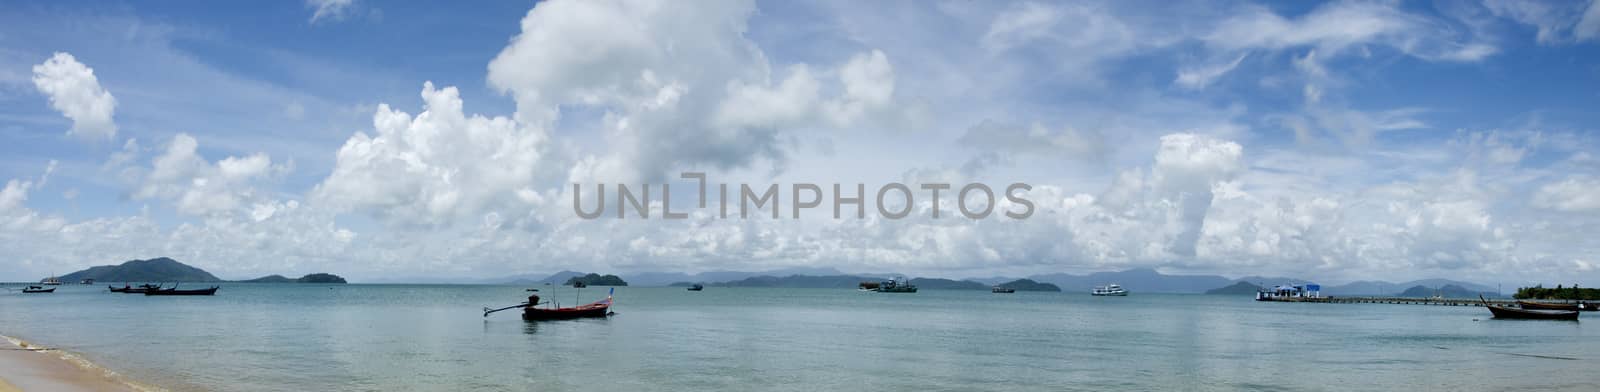 Panorama view at Pha Yam island, Thailand